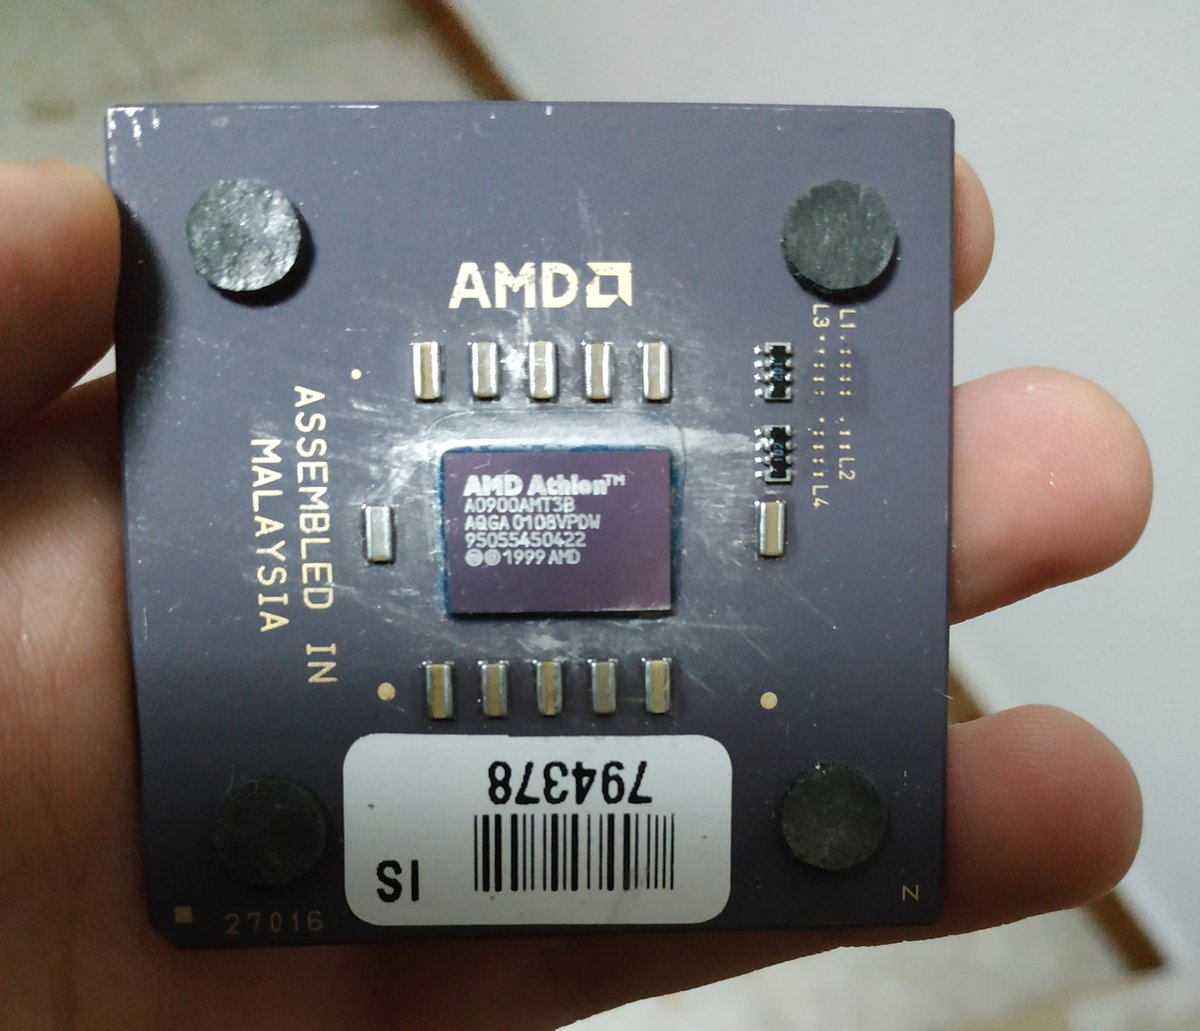 @AMDGaming @AMD @AMDServer @AMDPC New Photo!!! @AMD @PlusFour_1725 @kalyanxman 

AMD Athlon A0900AMT3B